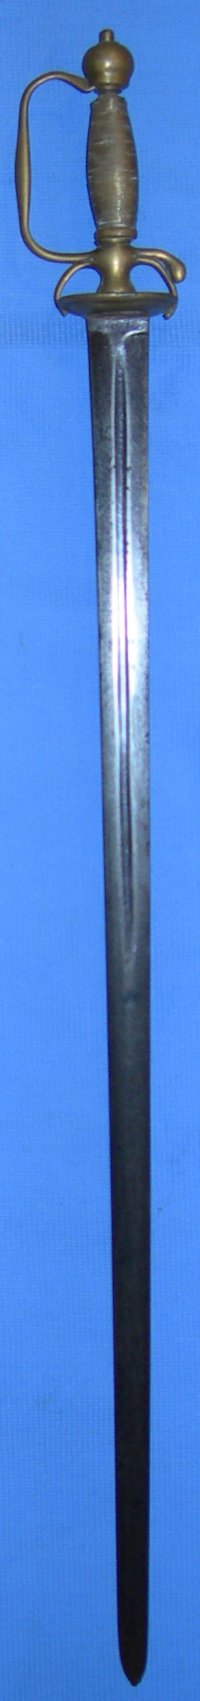 1780 British Infantry Officer's Sword